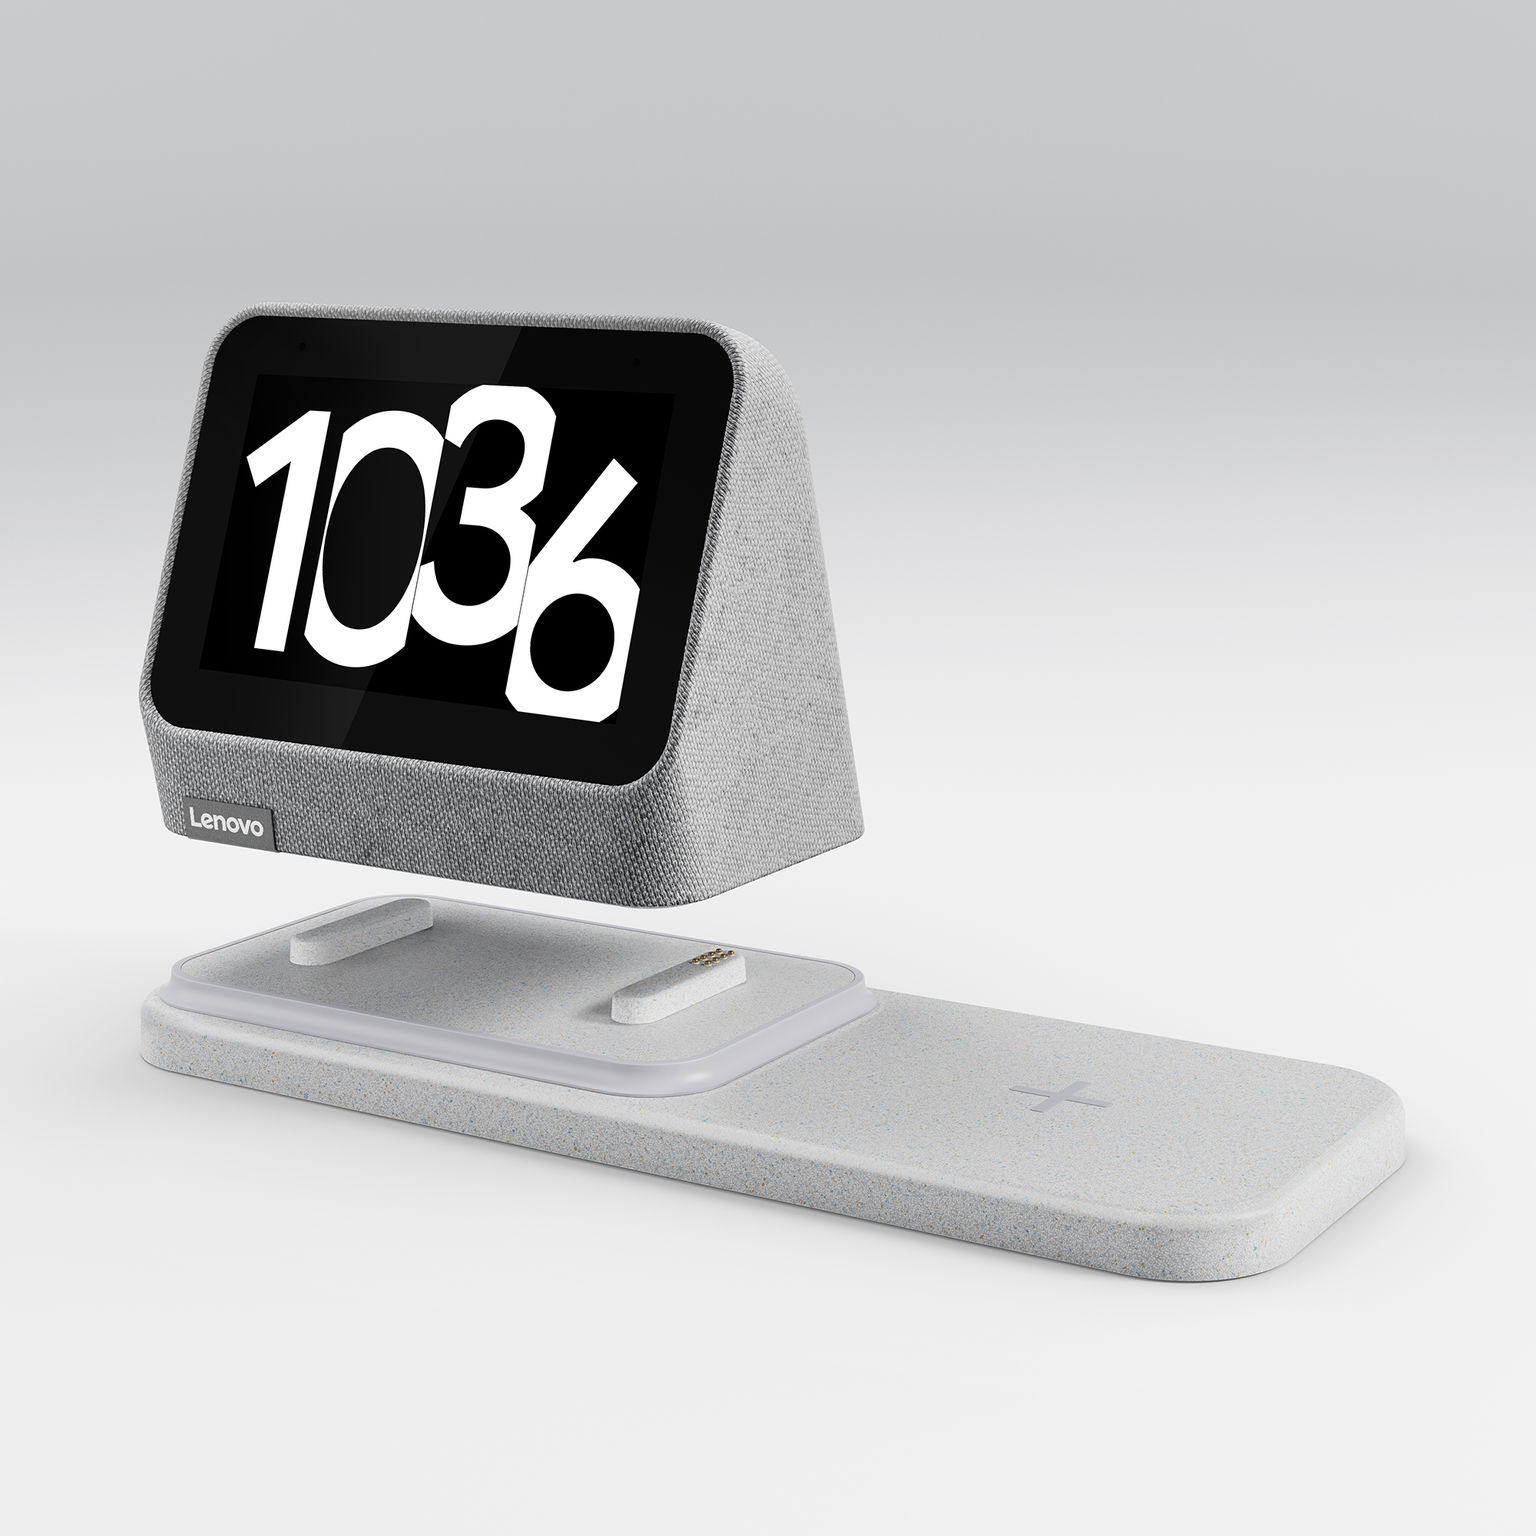 iF Design - Lenovo smart clock2